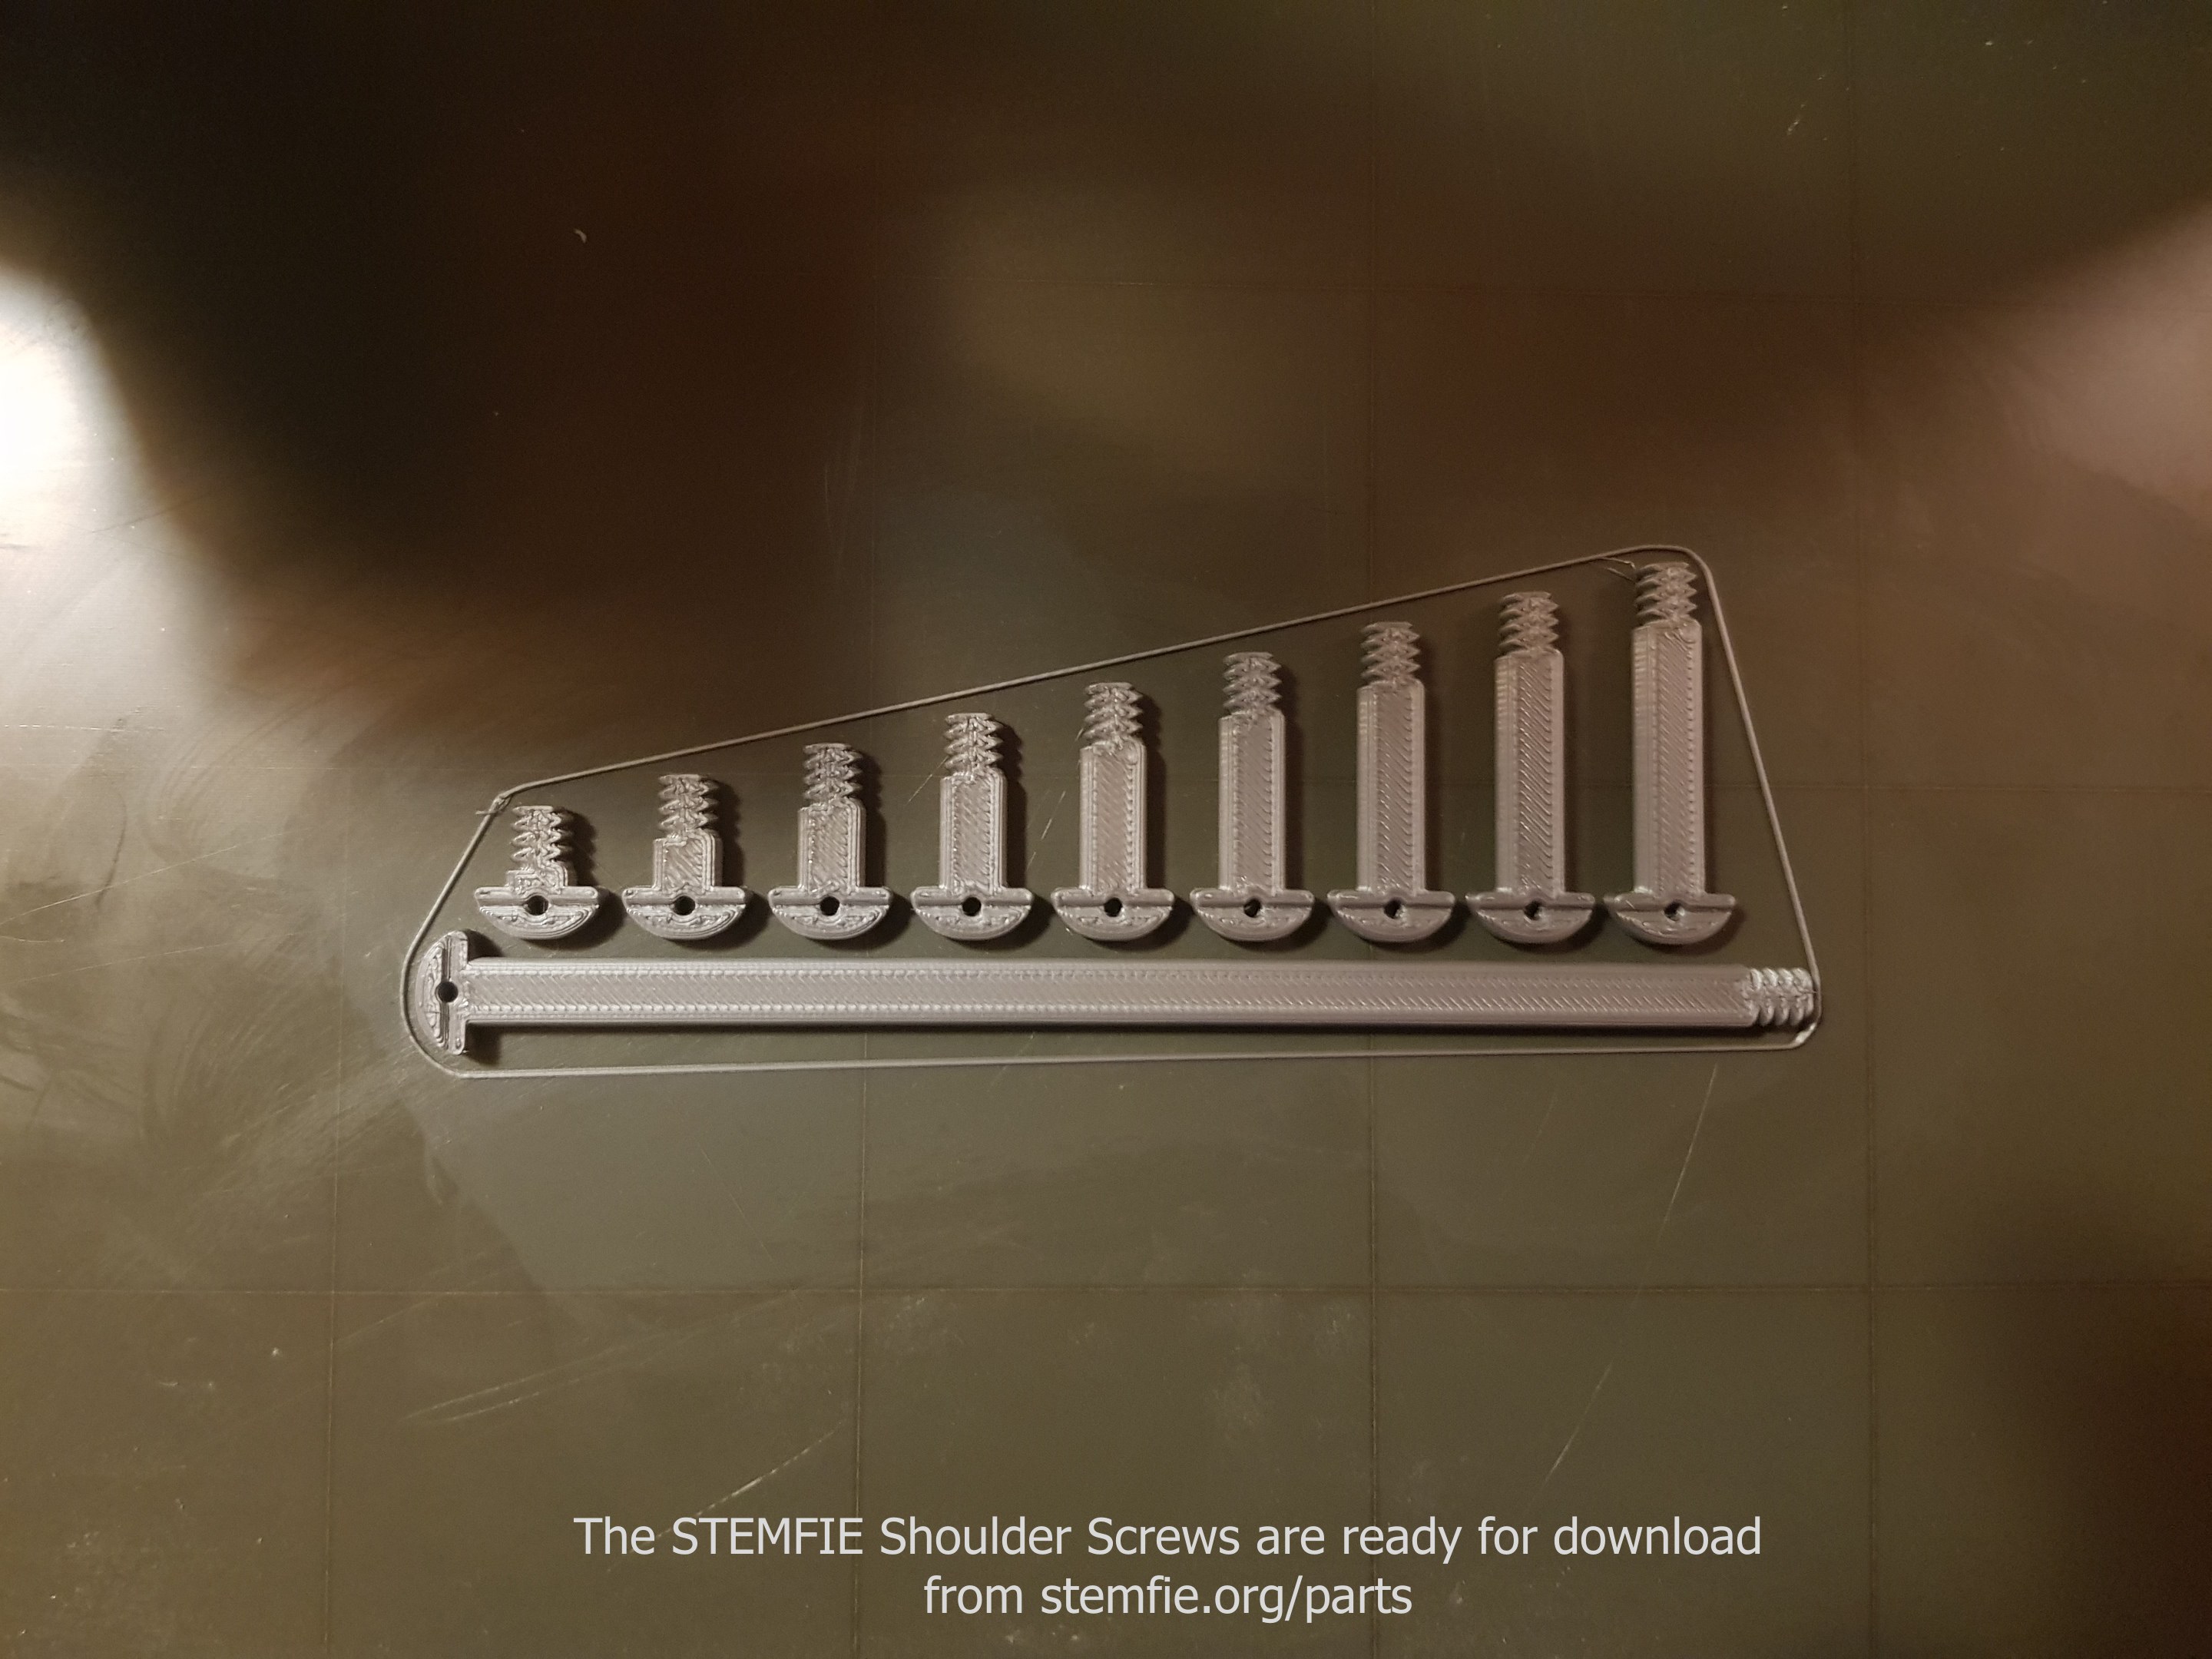 The STEMFIE Shoulder Screws are ready for download v02